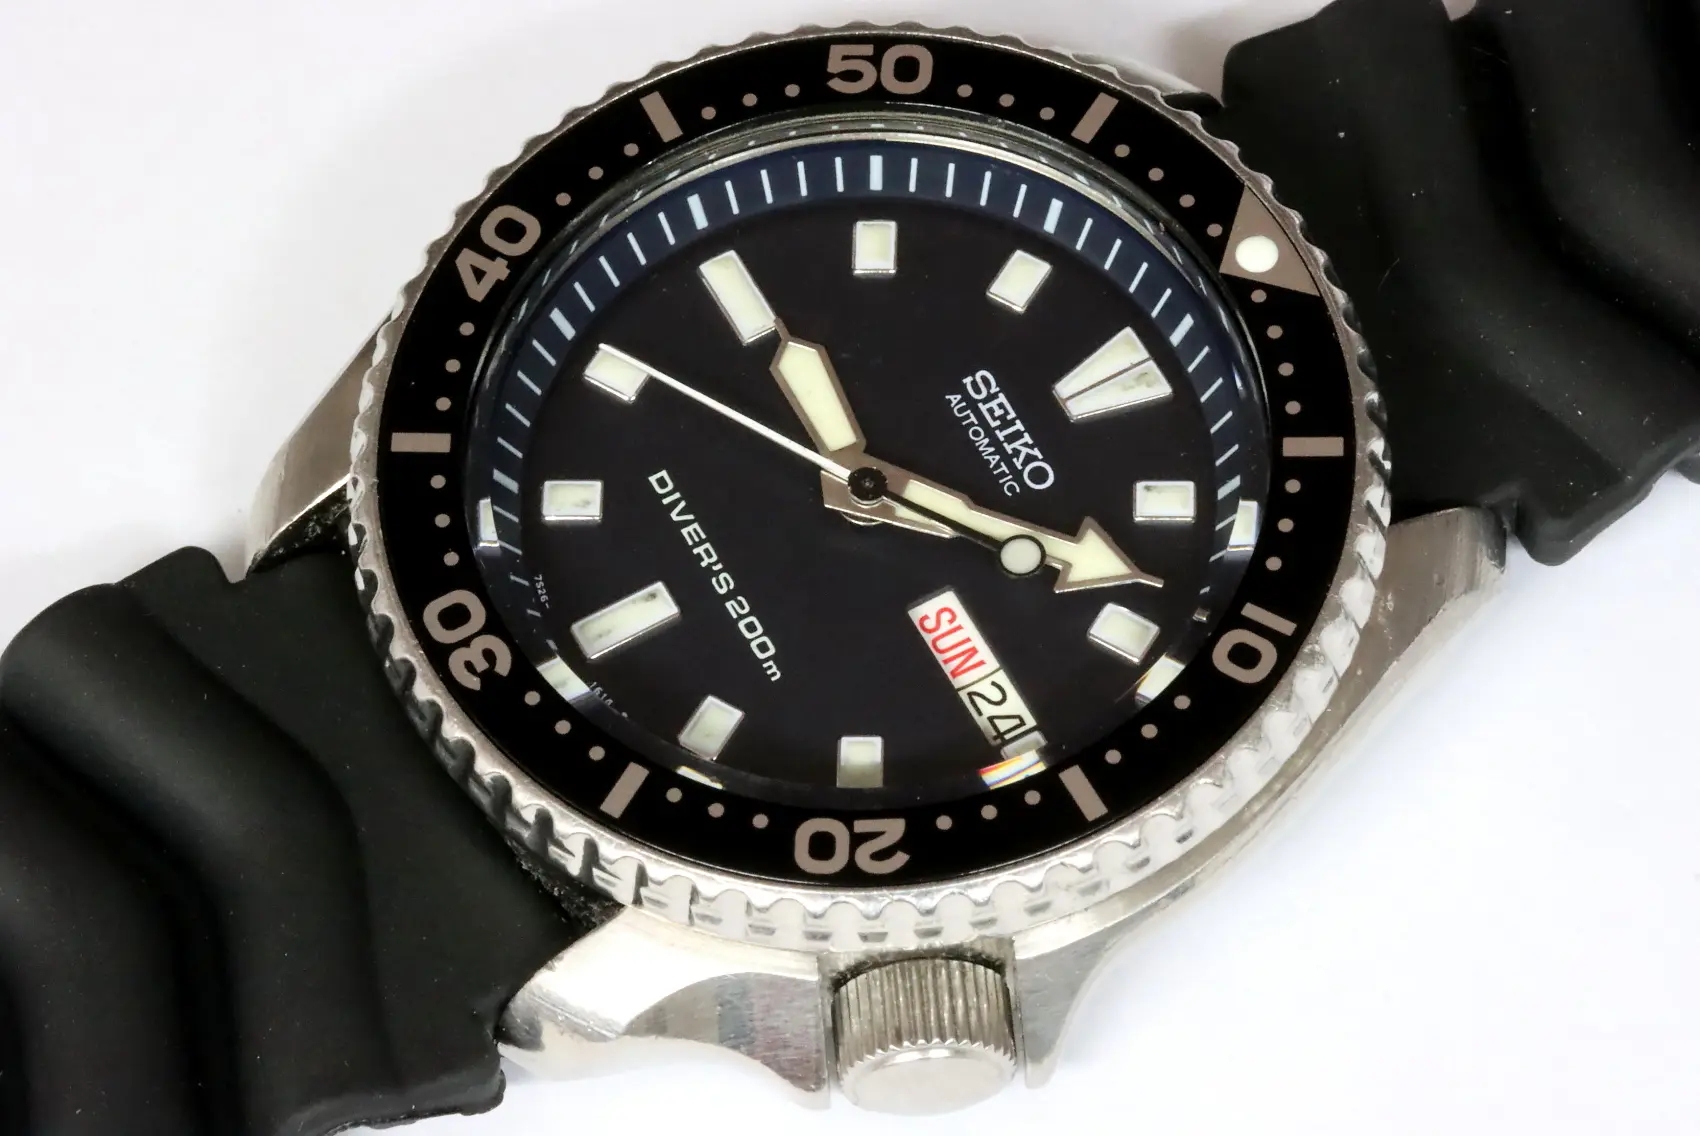 Seiko 7S26-0020 SKX399K automatic diver's watch